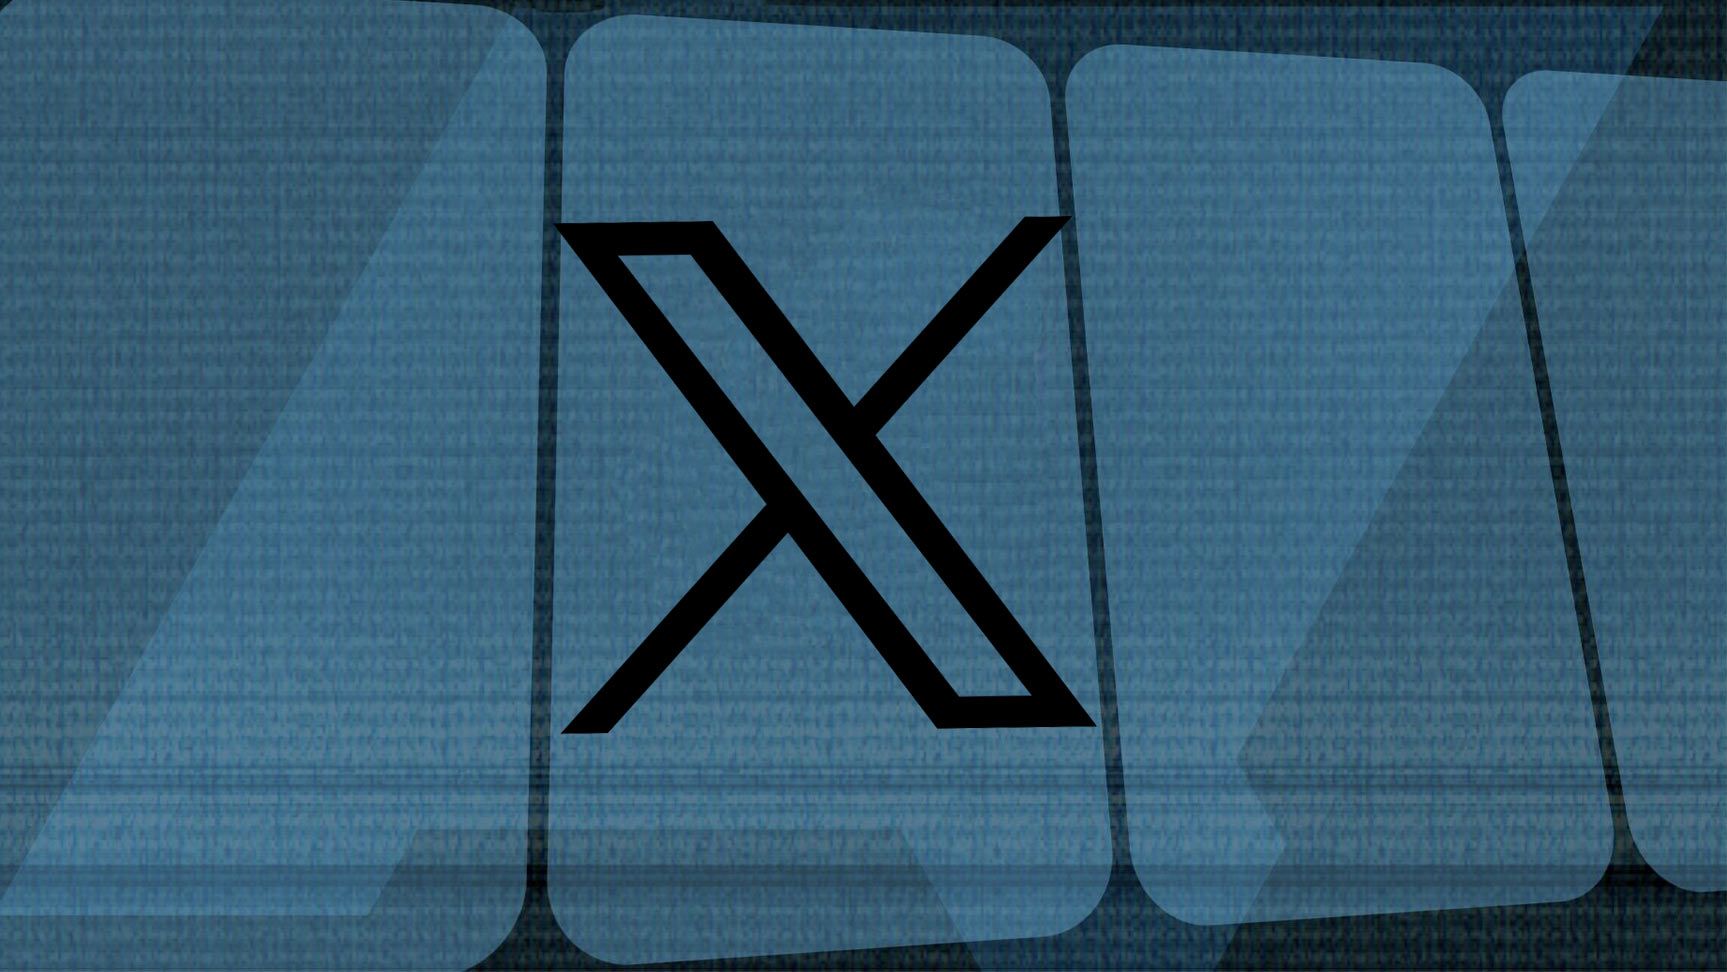 The X social media icon against an indigo background